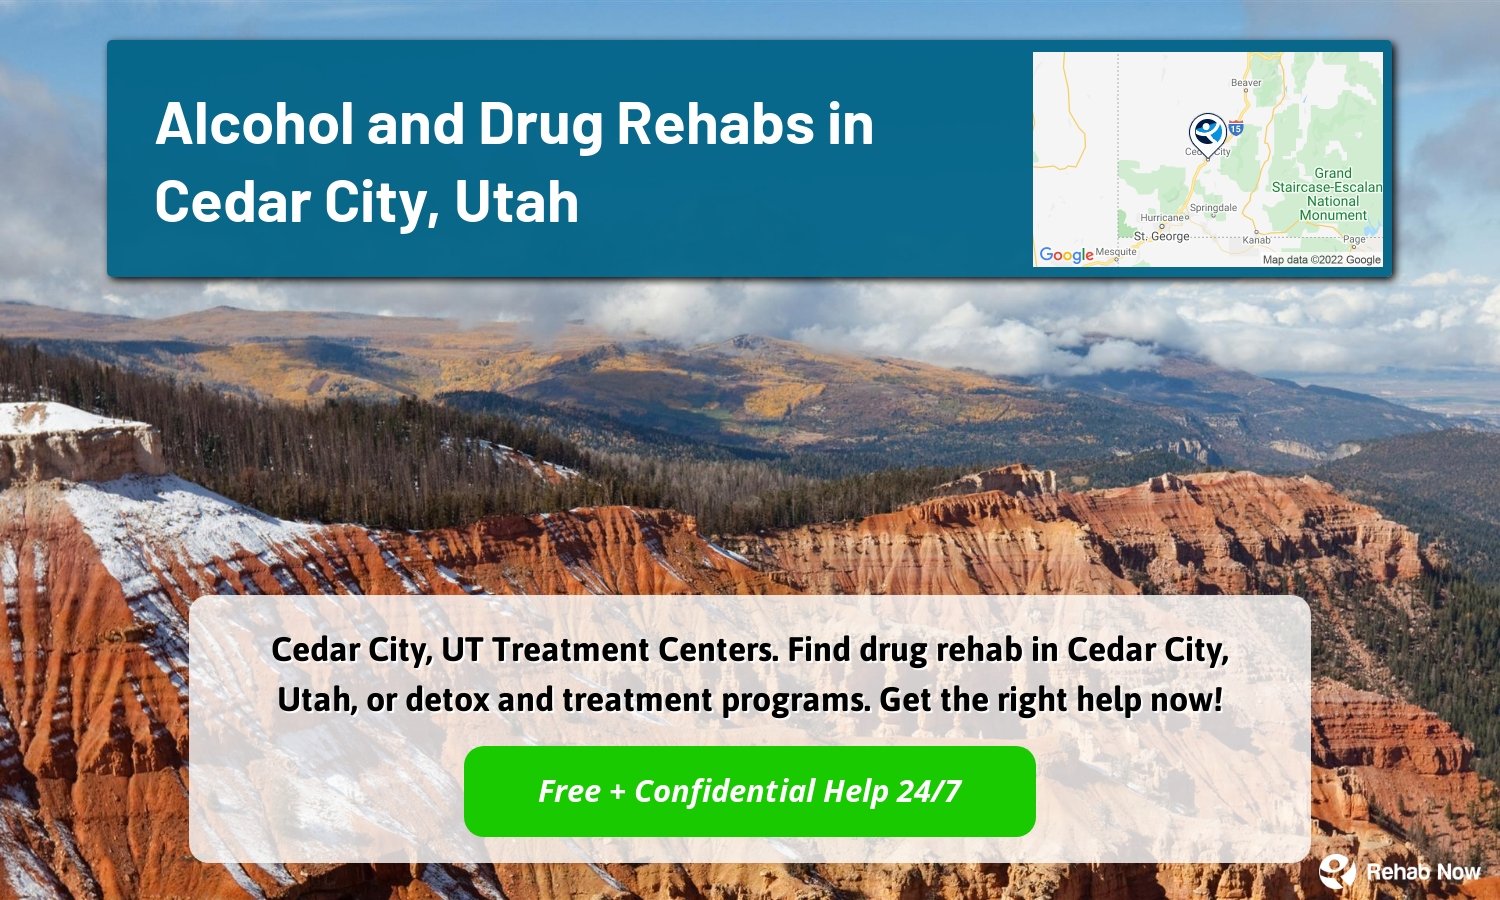 Cedar City, UT Treatment Centers. Find drug rehab in Cedar City, Utah, or detox and treatment programs. Get the right help now!